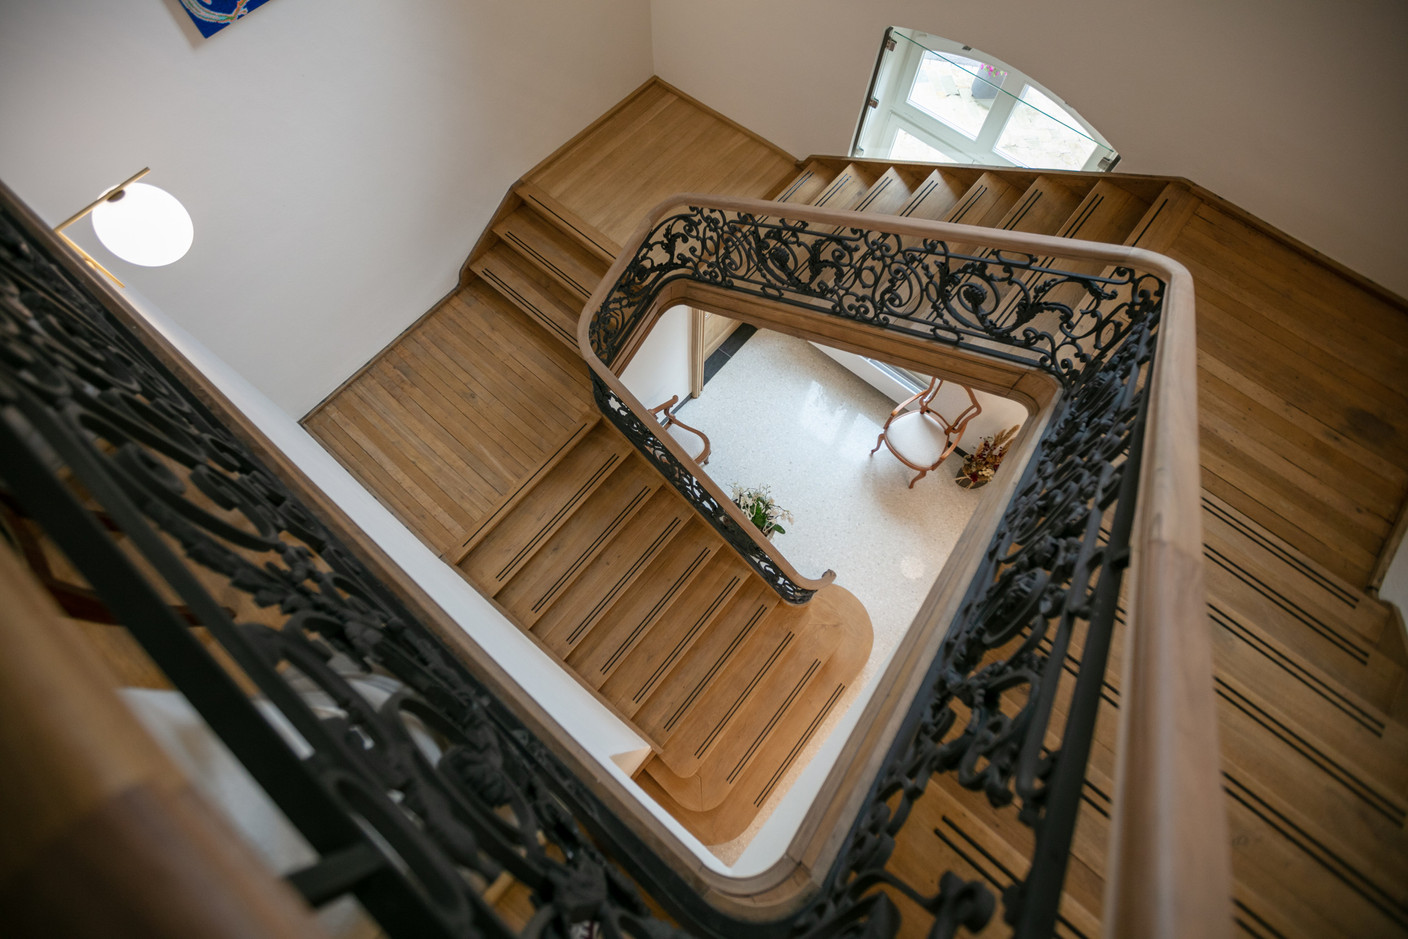 L'impressionnant escalier central. (Photo: Romain Gamba/Maison Moderne)